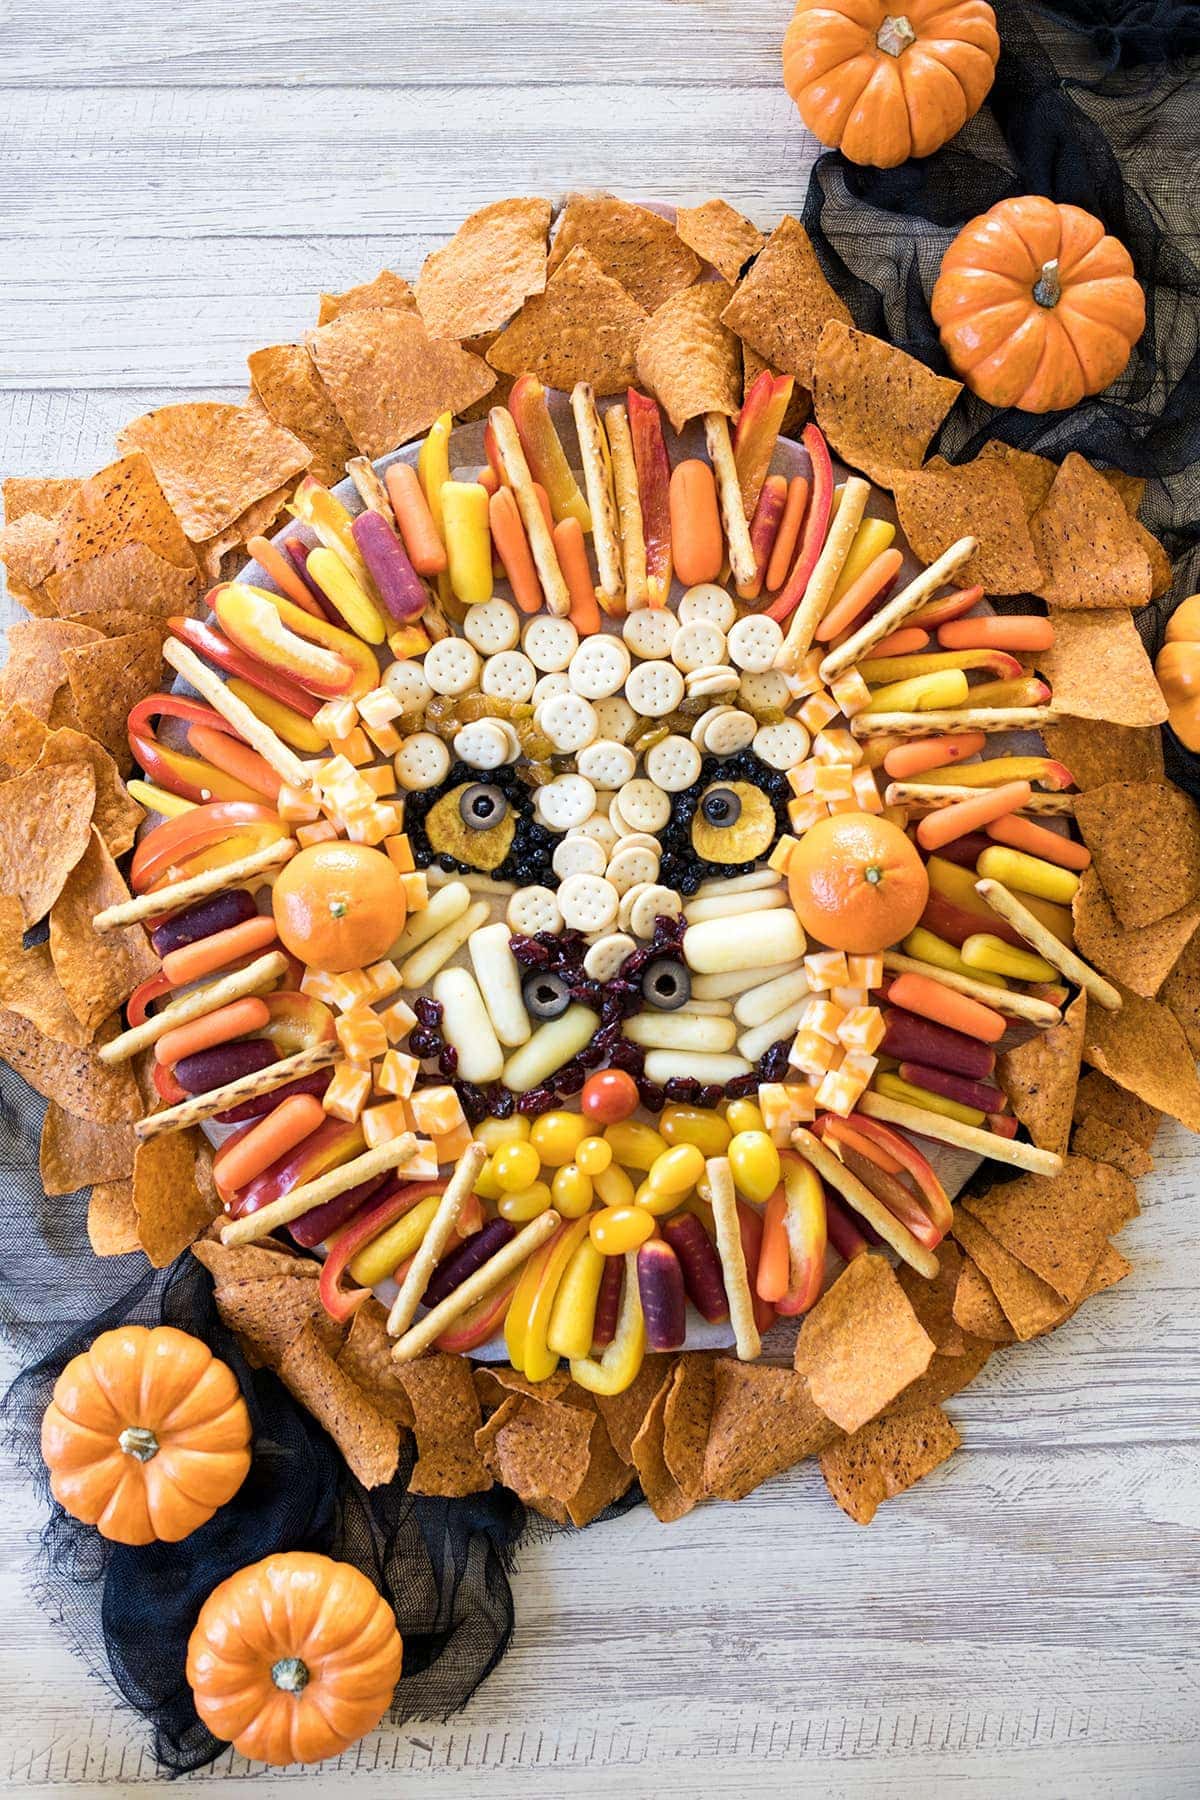 Disney's The Lion King Inspired Snack Board for Kids